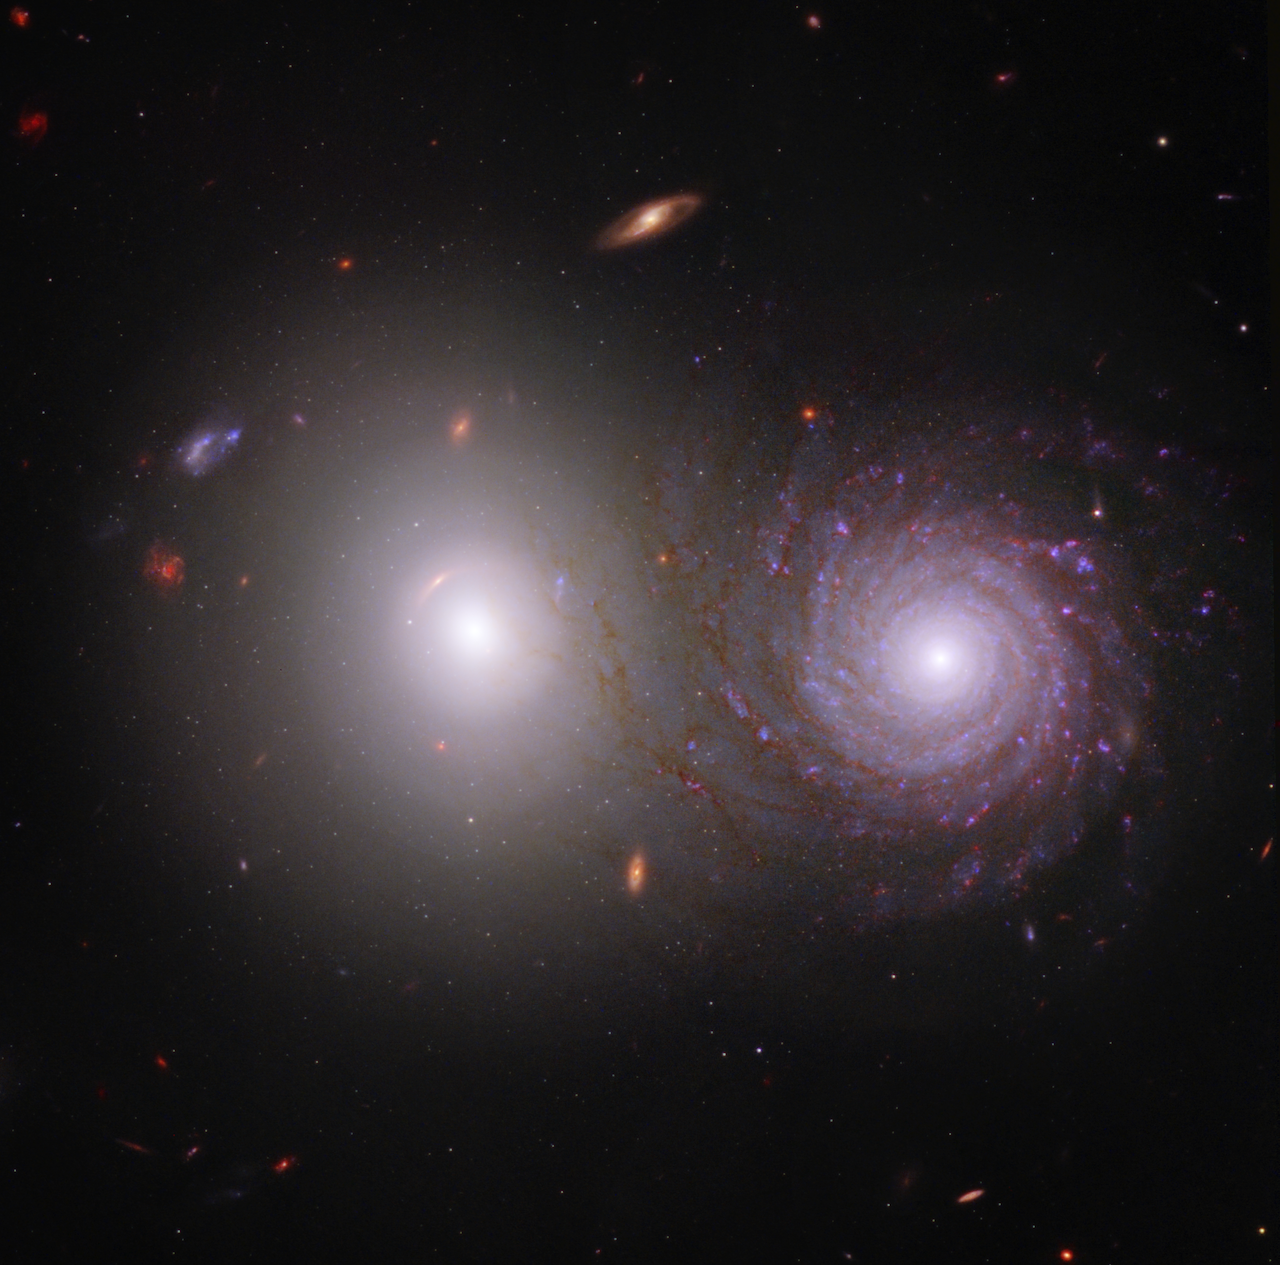 Webb images reveal interstellar discovery | ASU News